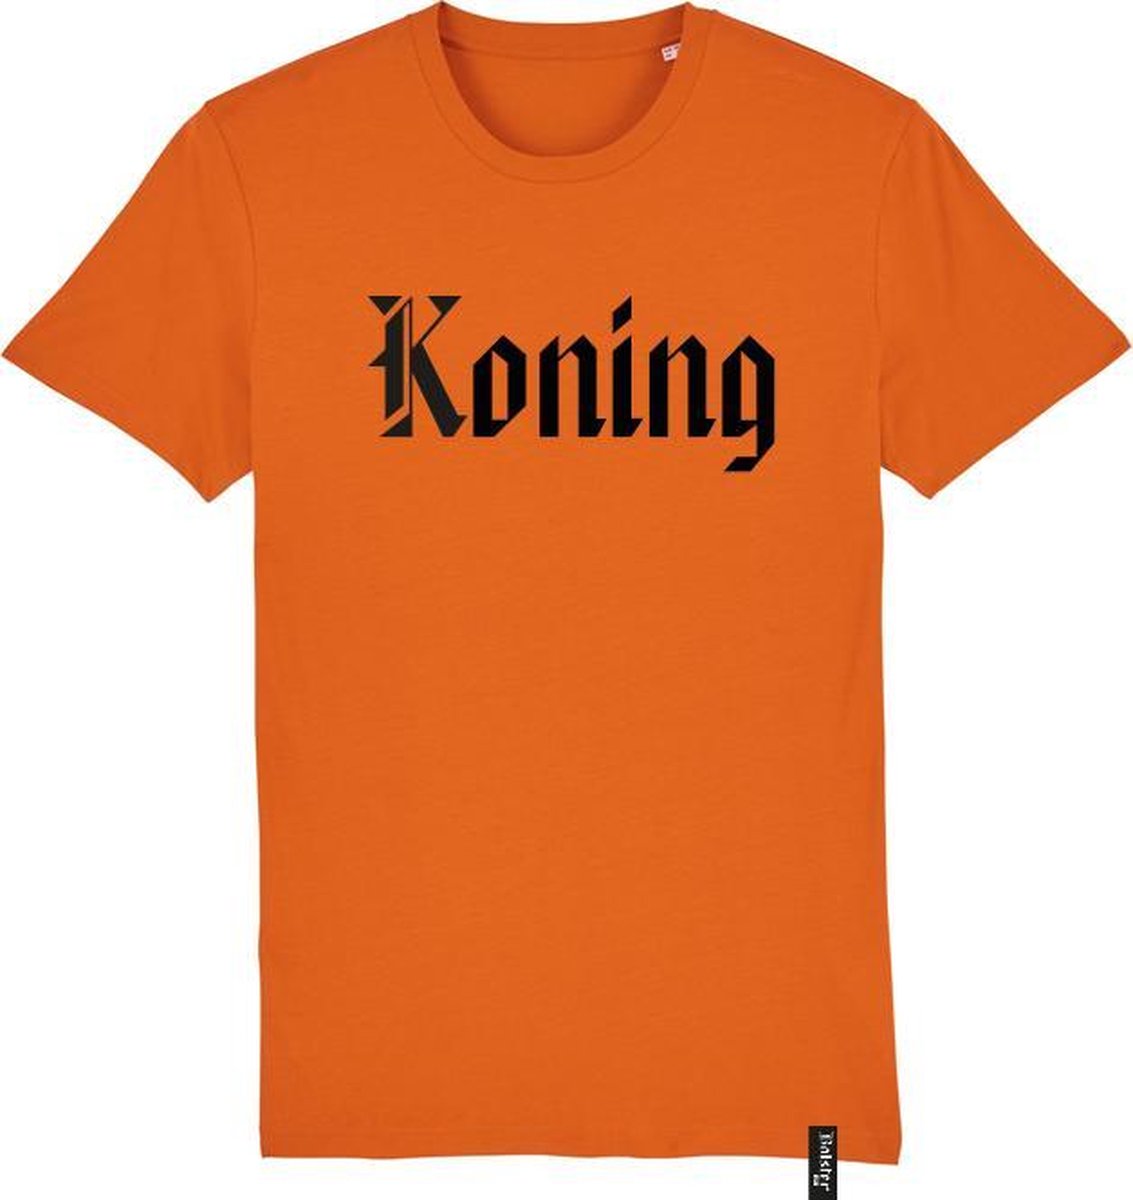 T-shirt | Bolster#0049 - Koning| Maat: S